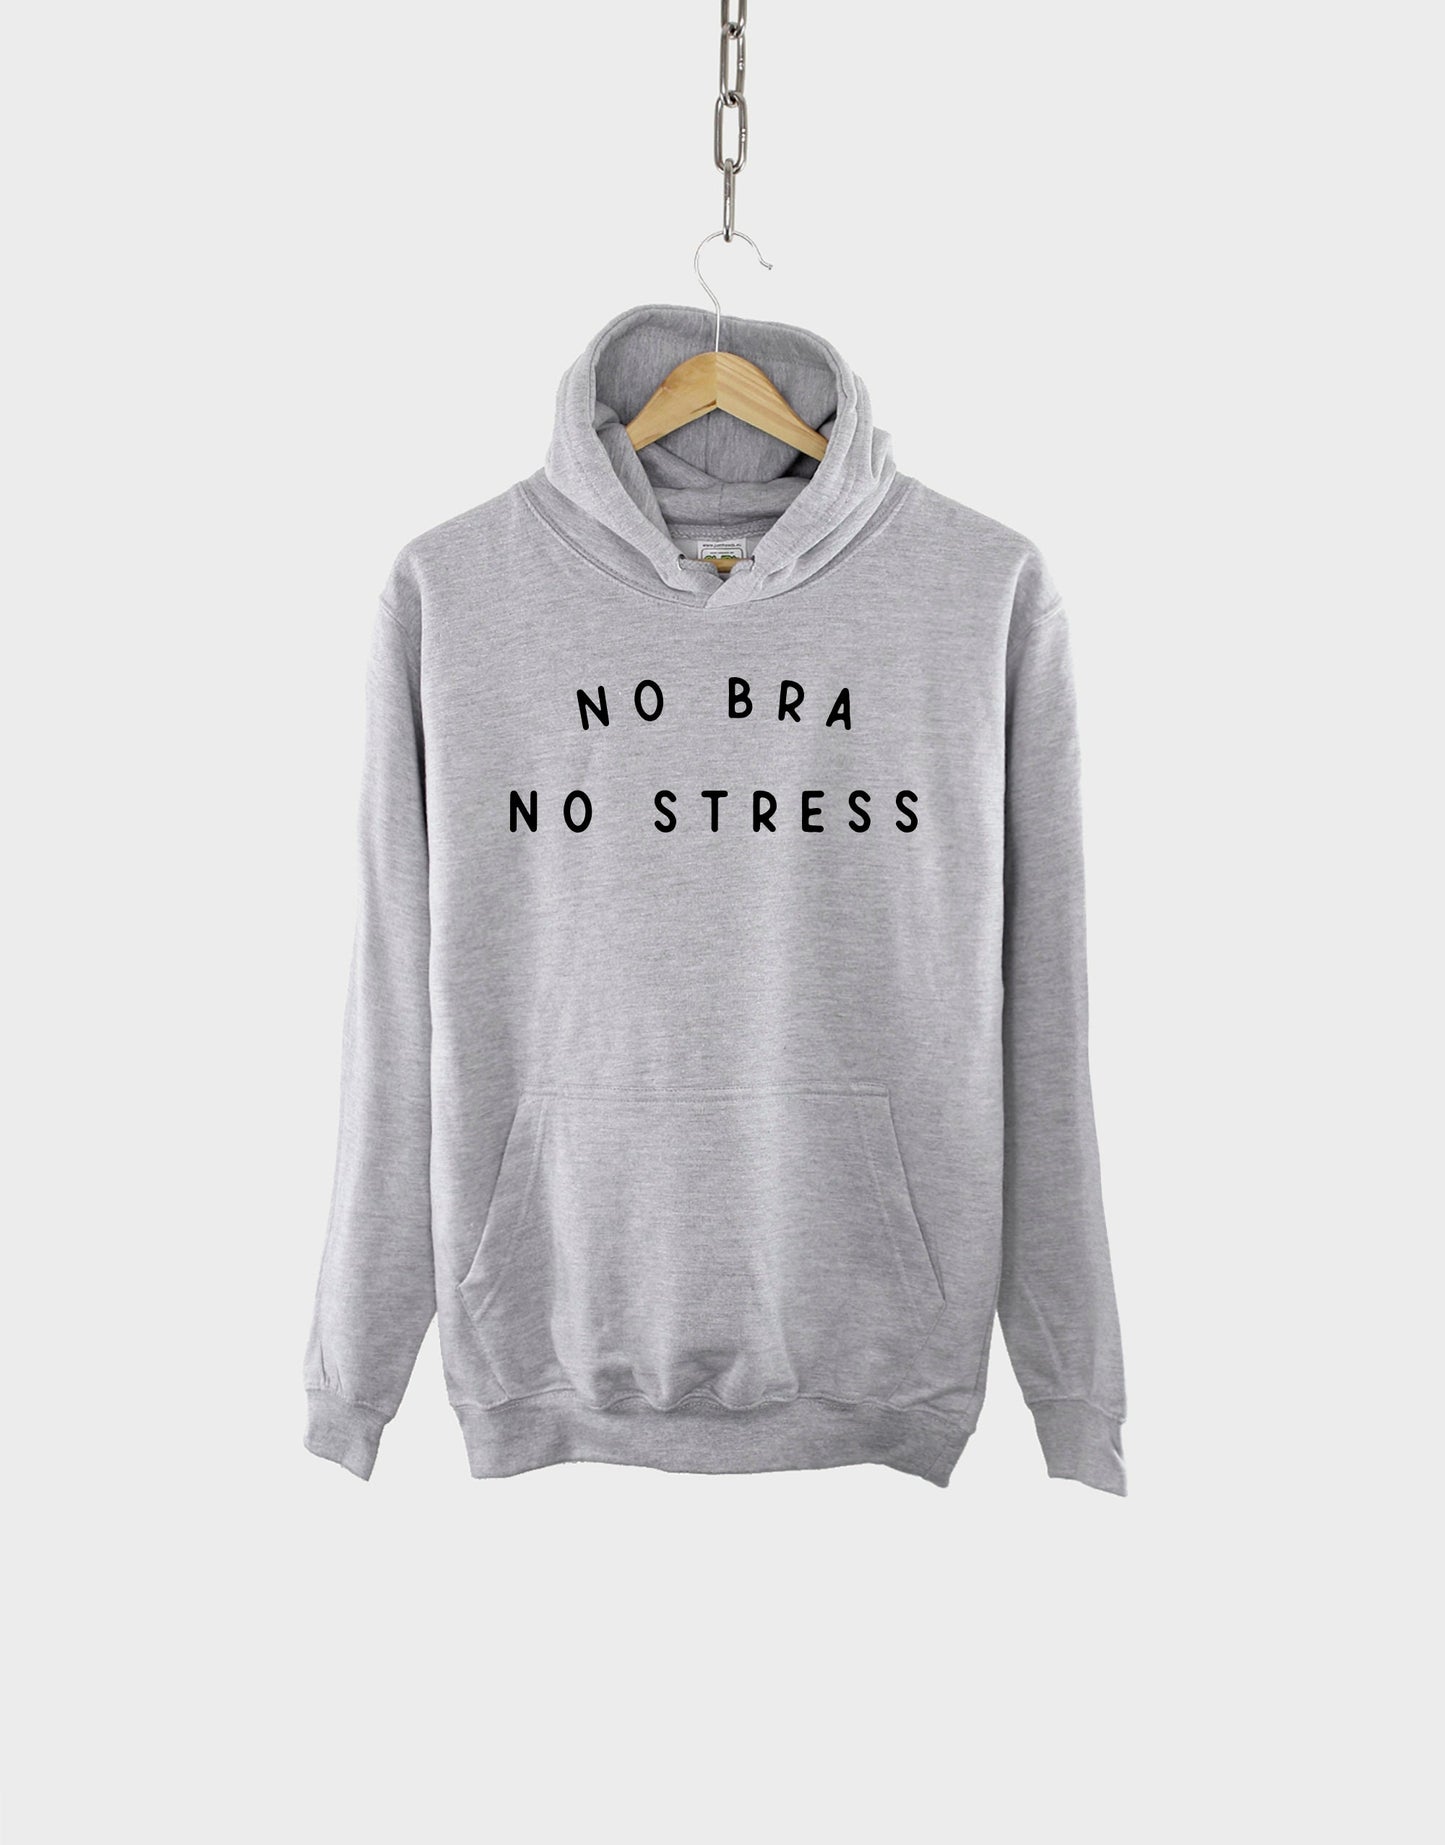 No Bra No Stress Hoodie - Funny Boob Sweatshirt - Womens Hoody